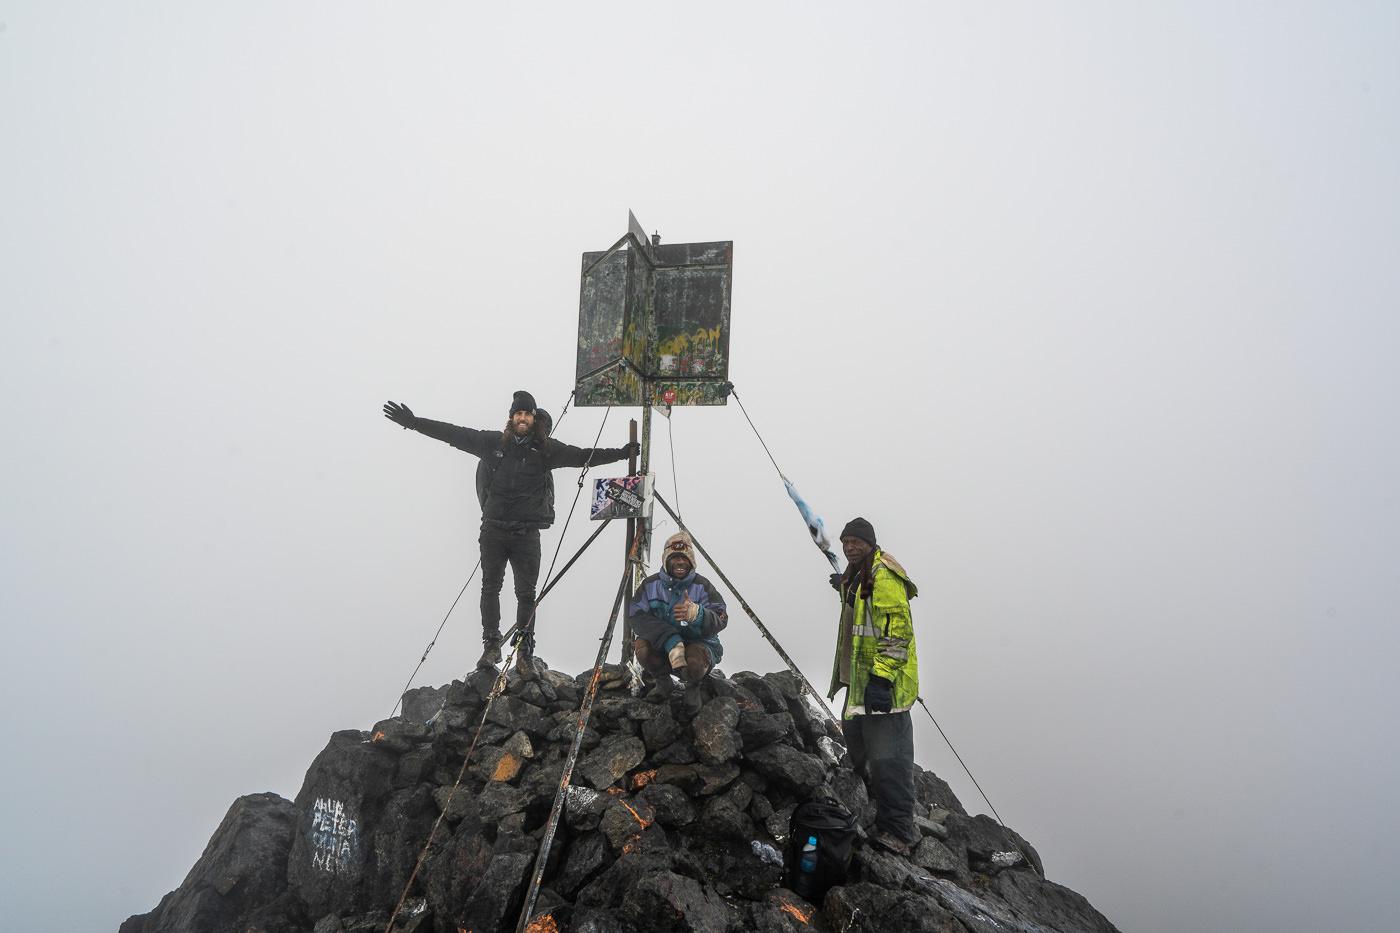 MOUNT WILHELM TREK (4,509M) – EVERYTHING YOU NEED TO KNOW